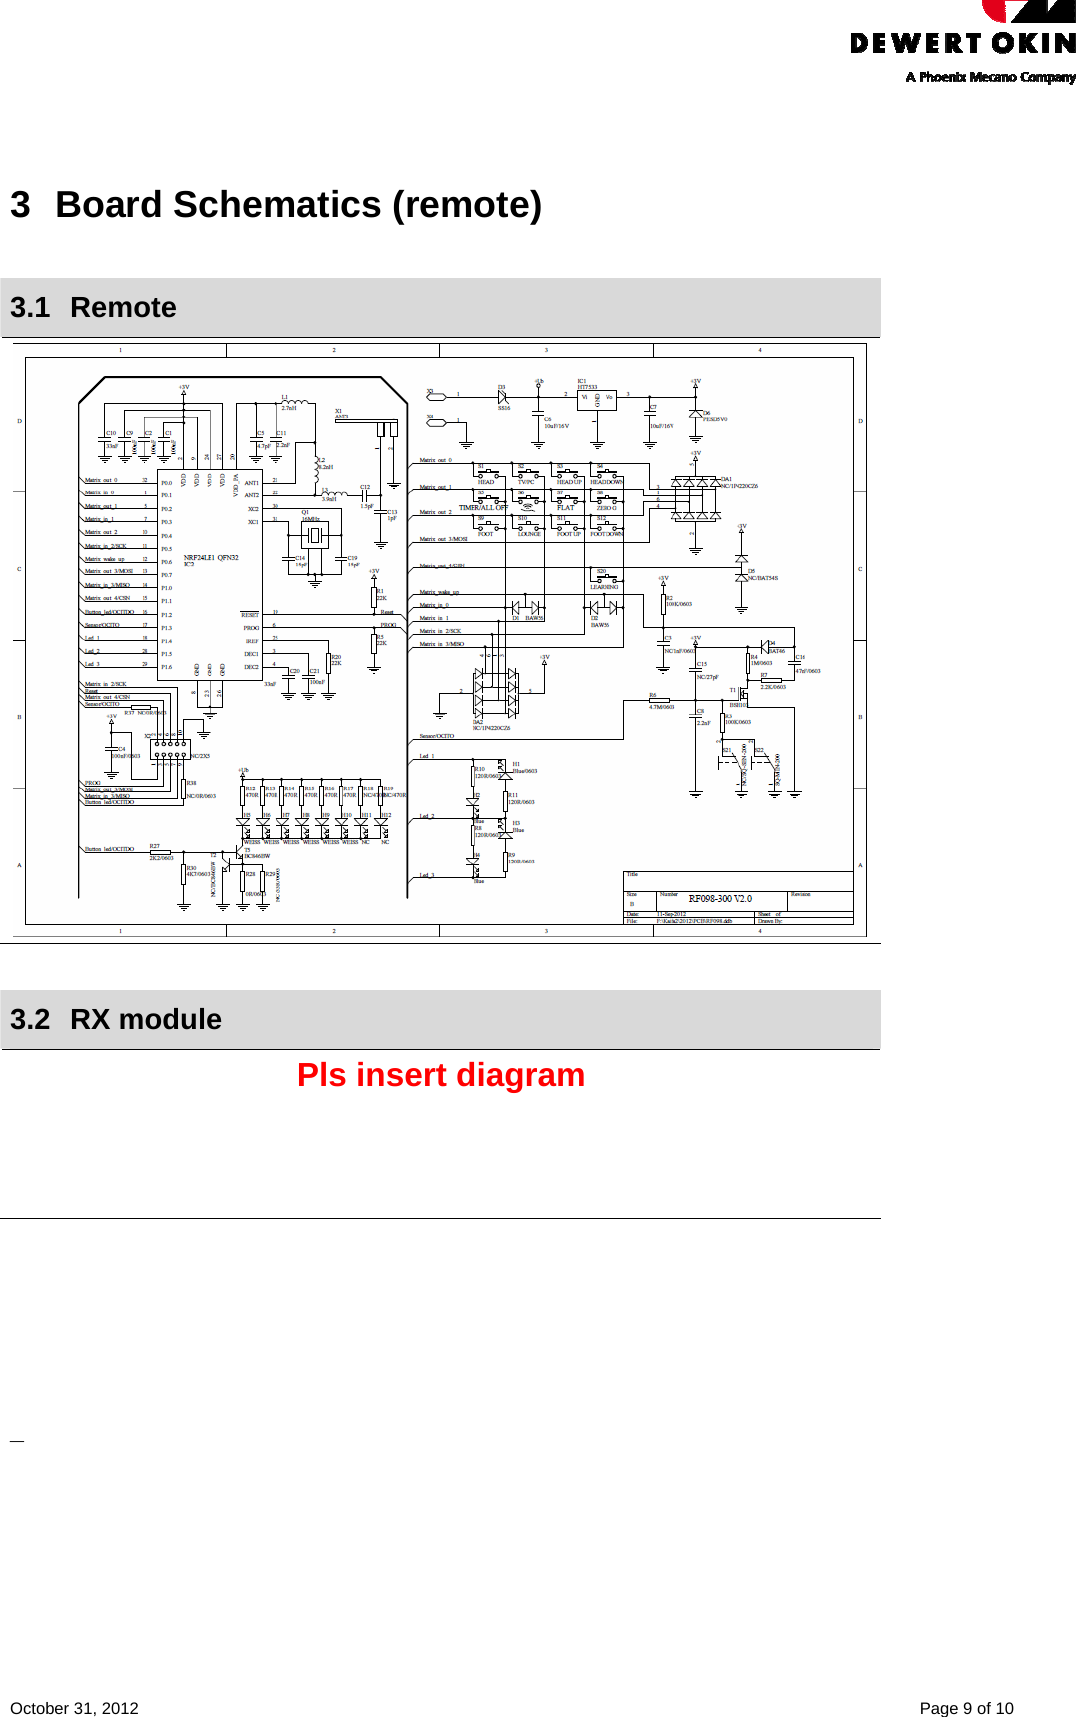    October 31, 2012    Page 9 of 10  3  Board Schematics (remote)  3.1 Remote   3.2 RX module Pls insert diagram       _      